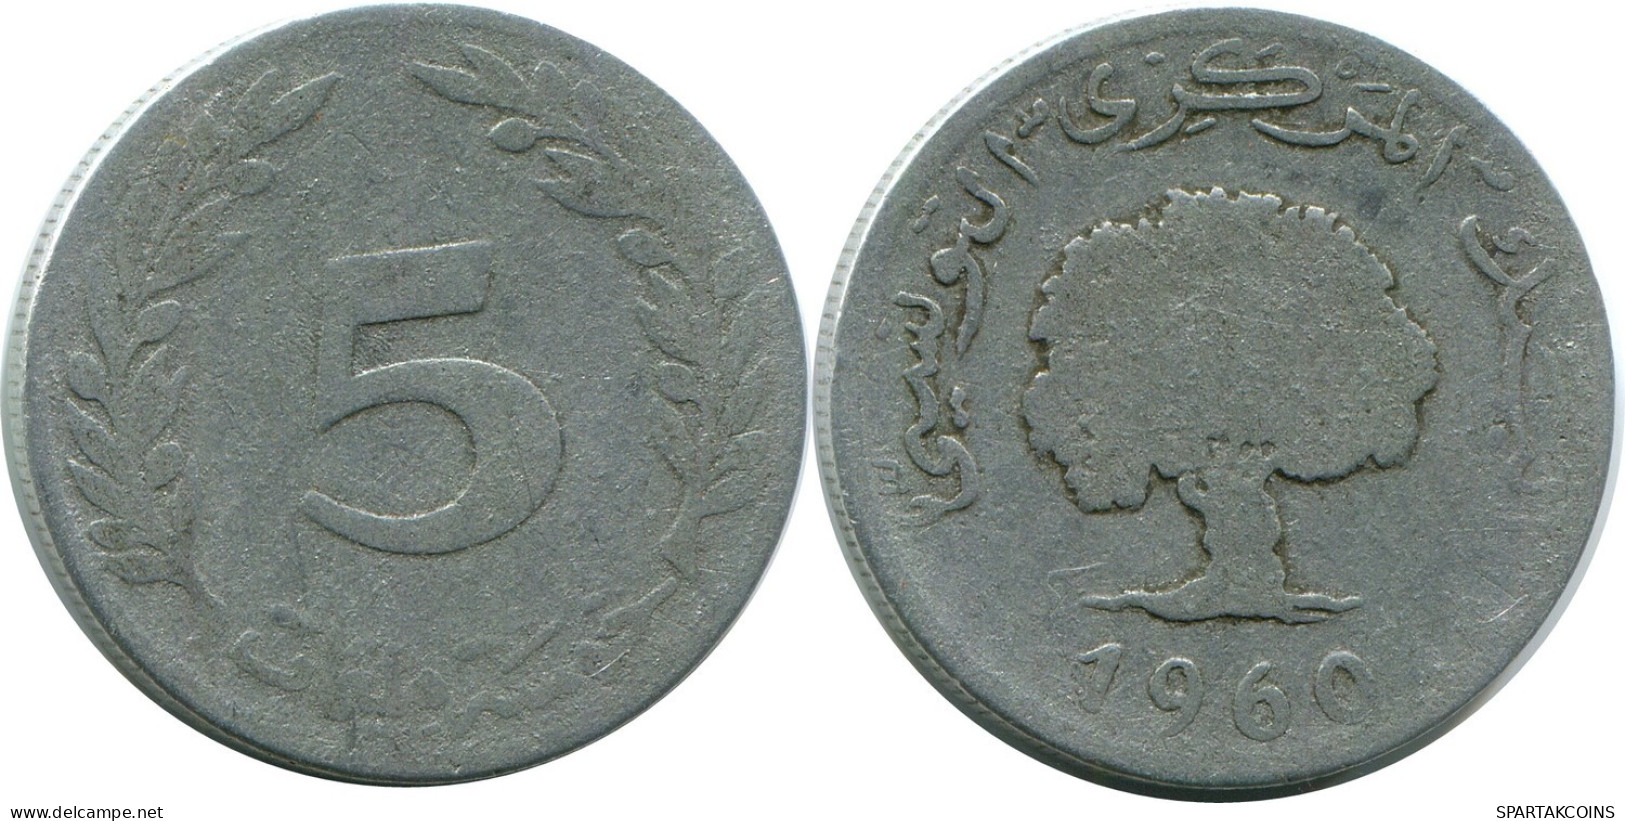 5 MILLIMES 1960 TUNESIEN TUNISIA Münze #AP236.D.A - Tunisia